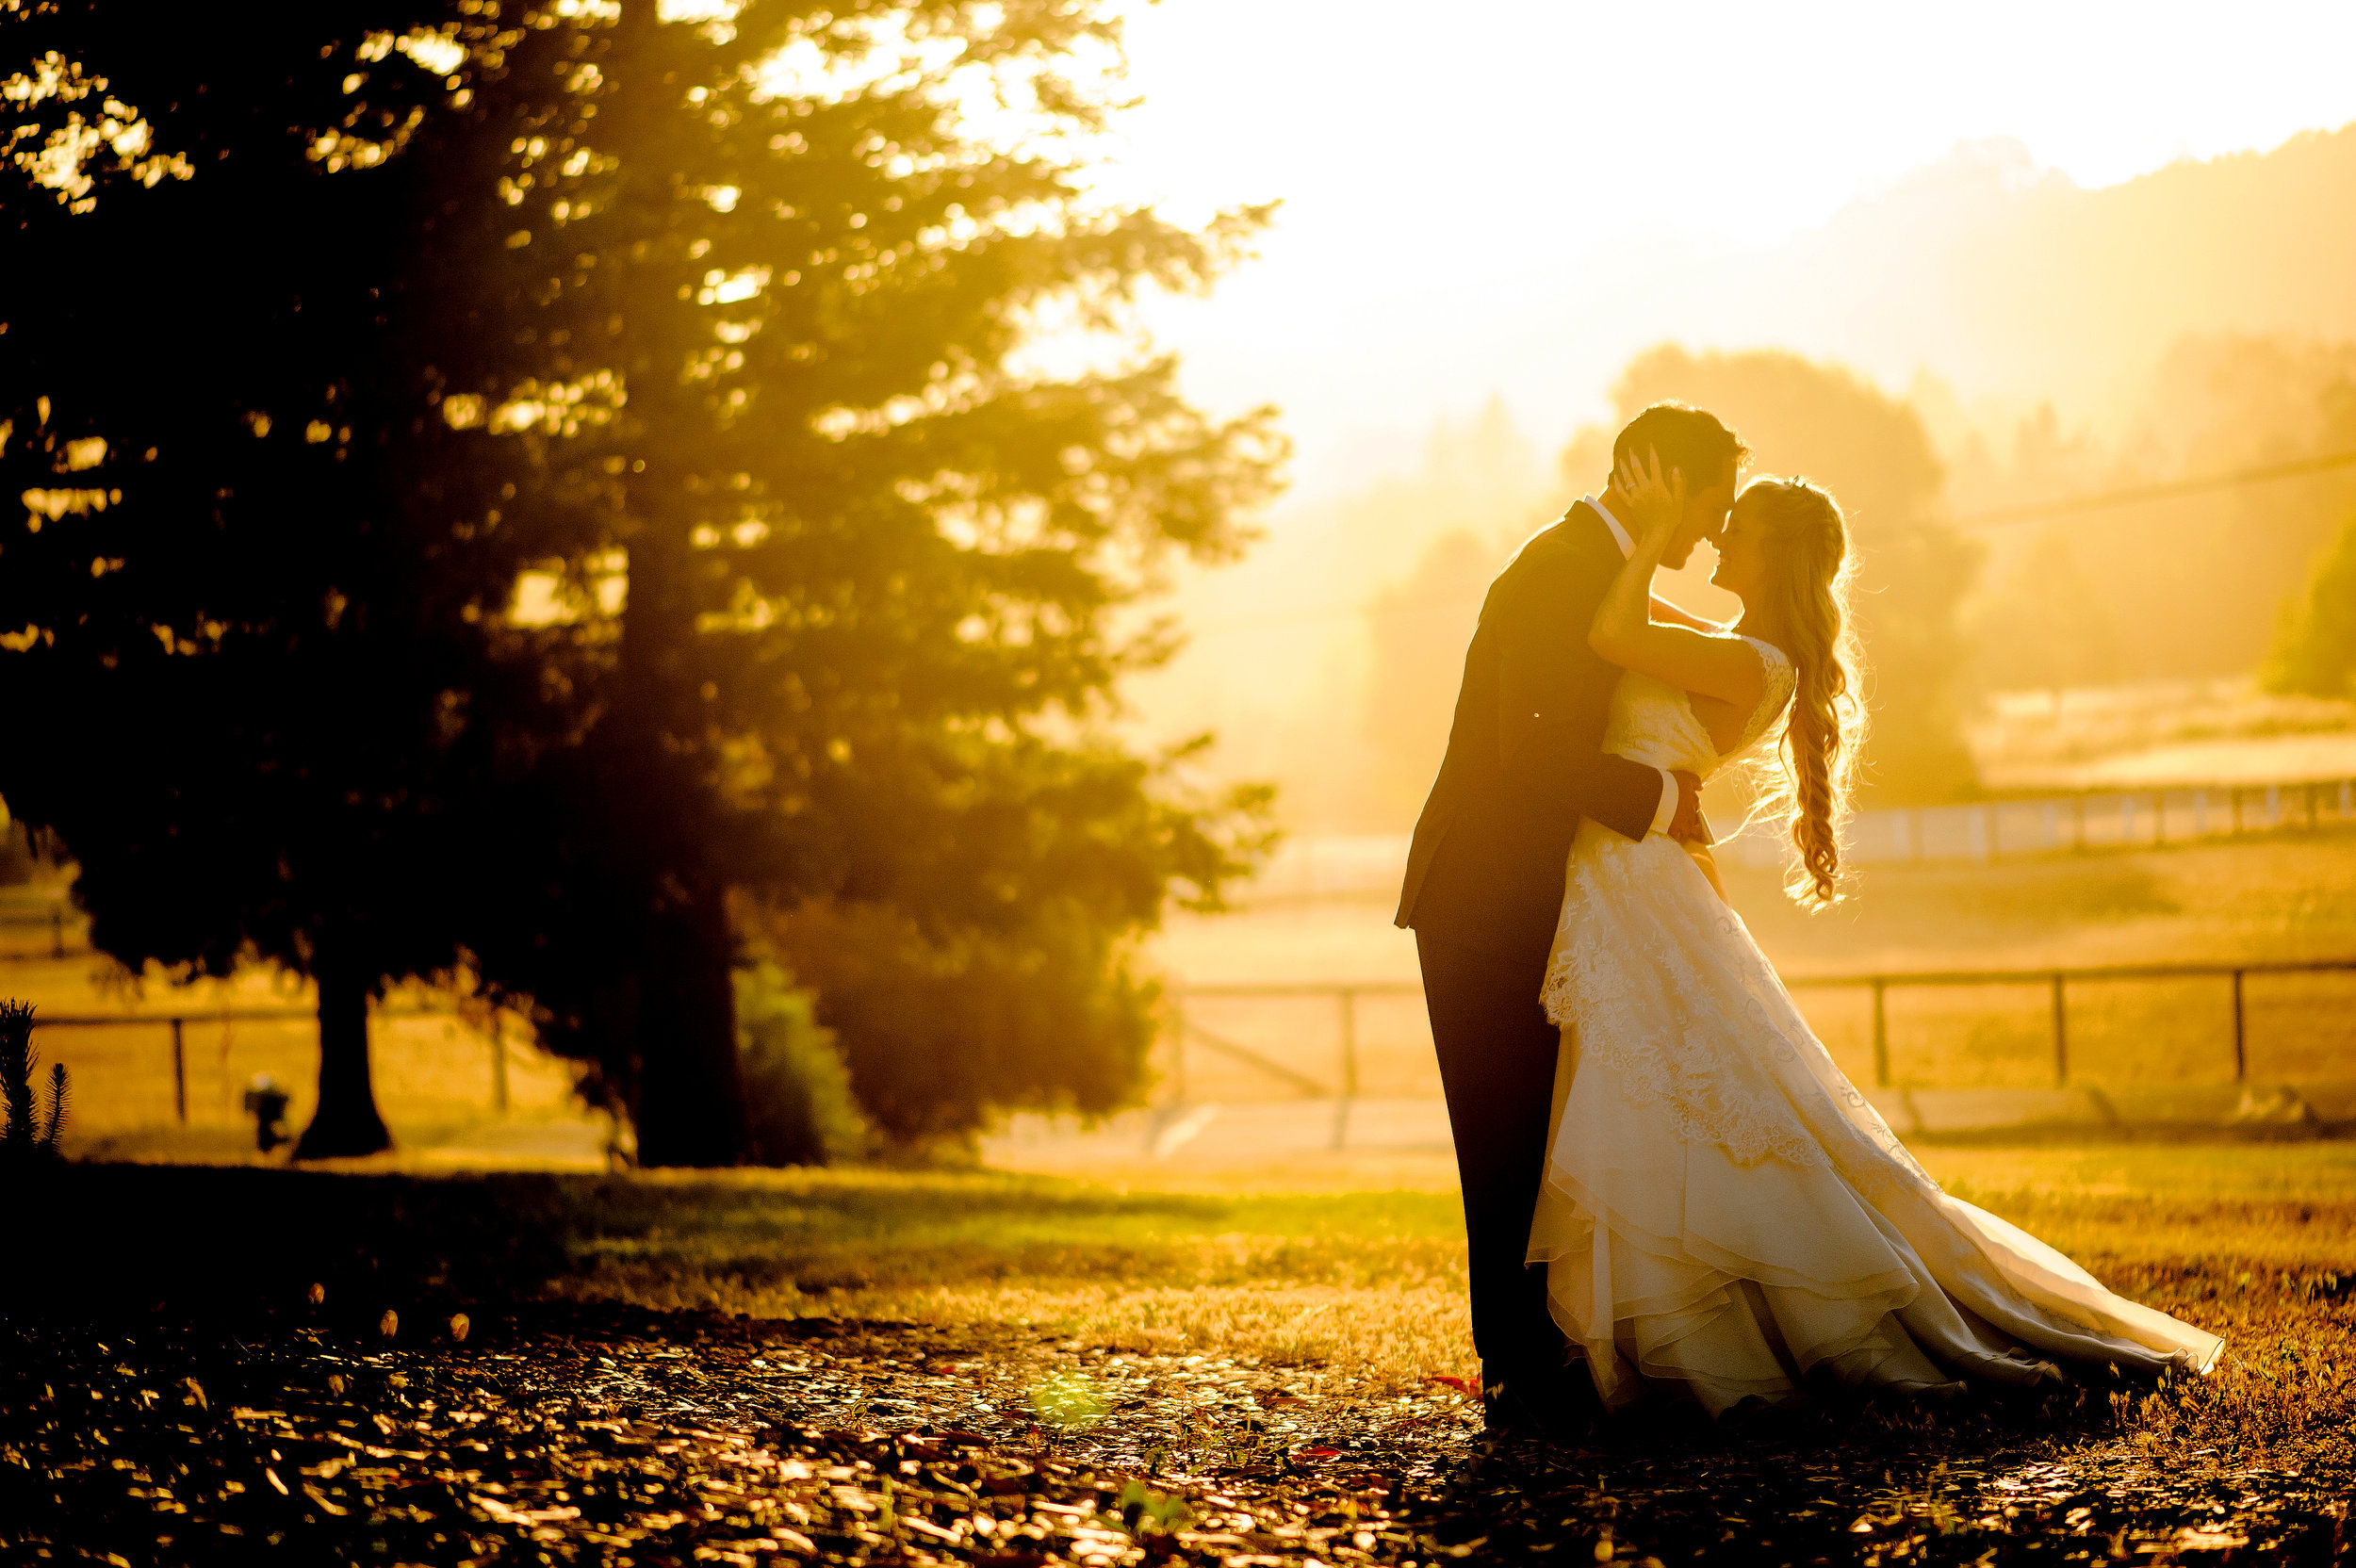  Wedding portrait during golden hour at backyard wedding in Sonoma California. 